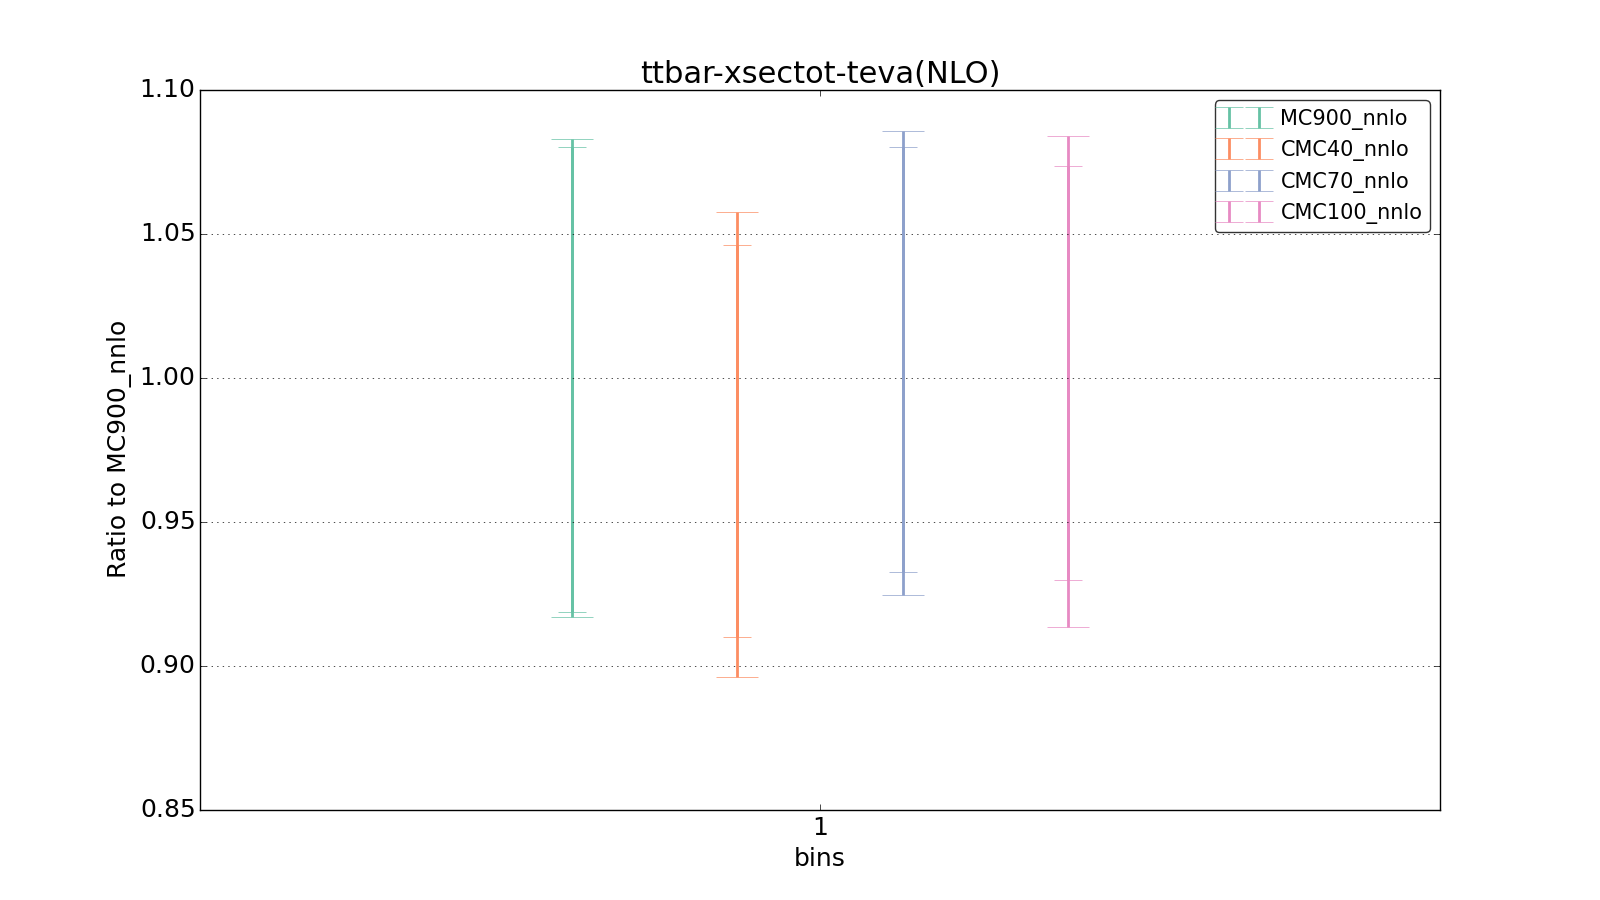 figure plots/CMCpheno/group_0_ciplot_ttbar-xsectot-teva(NLO).png